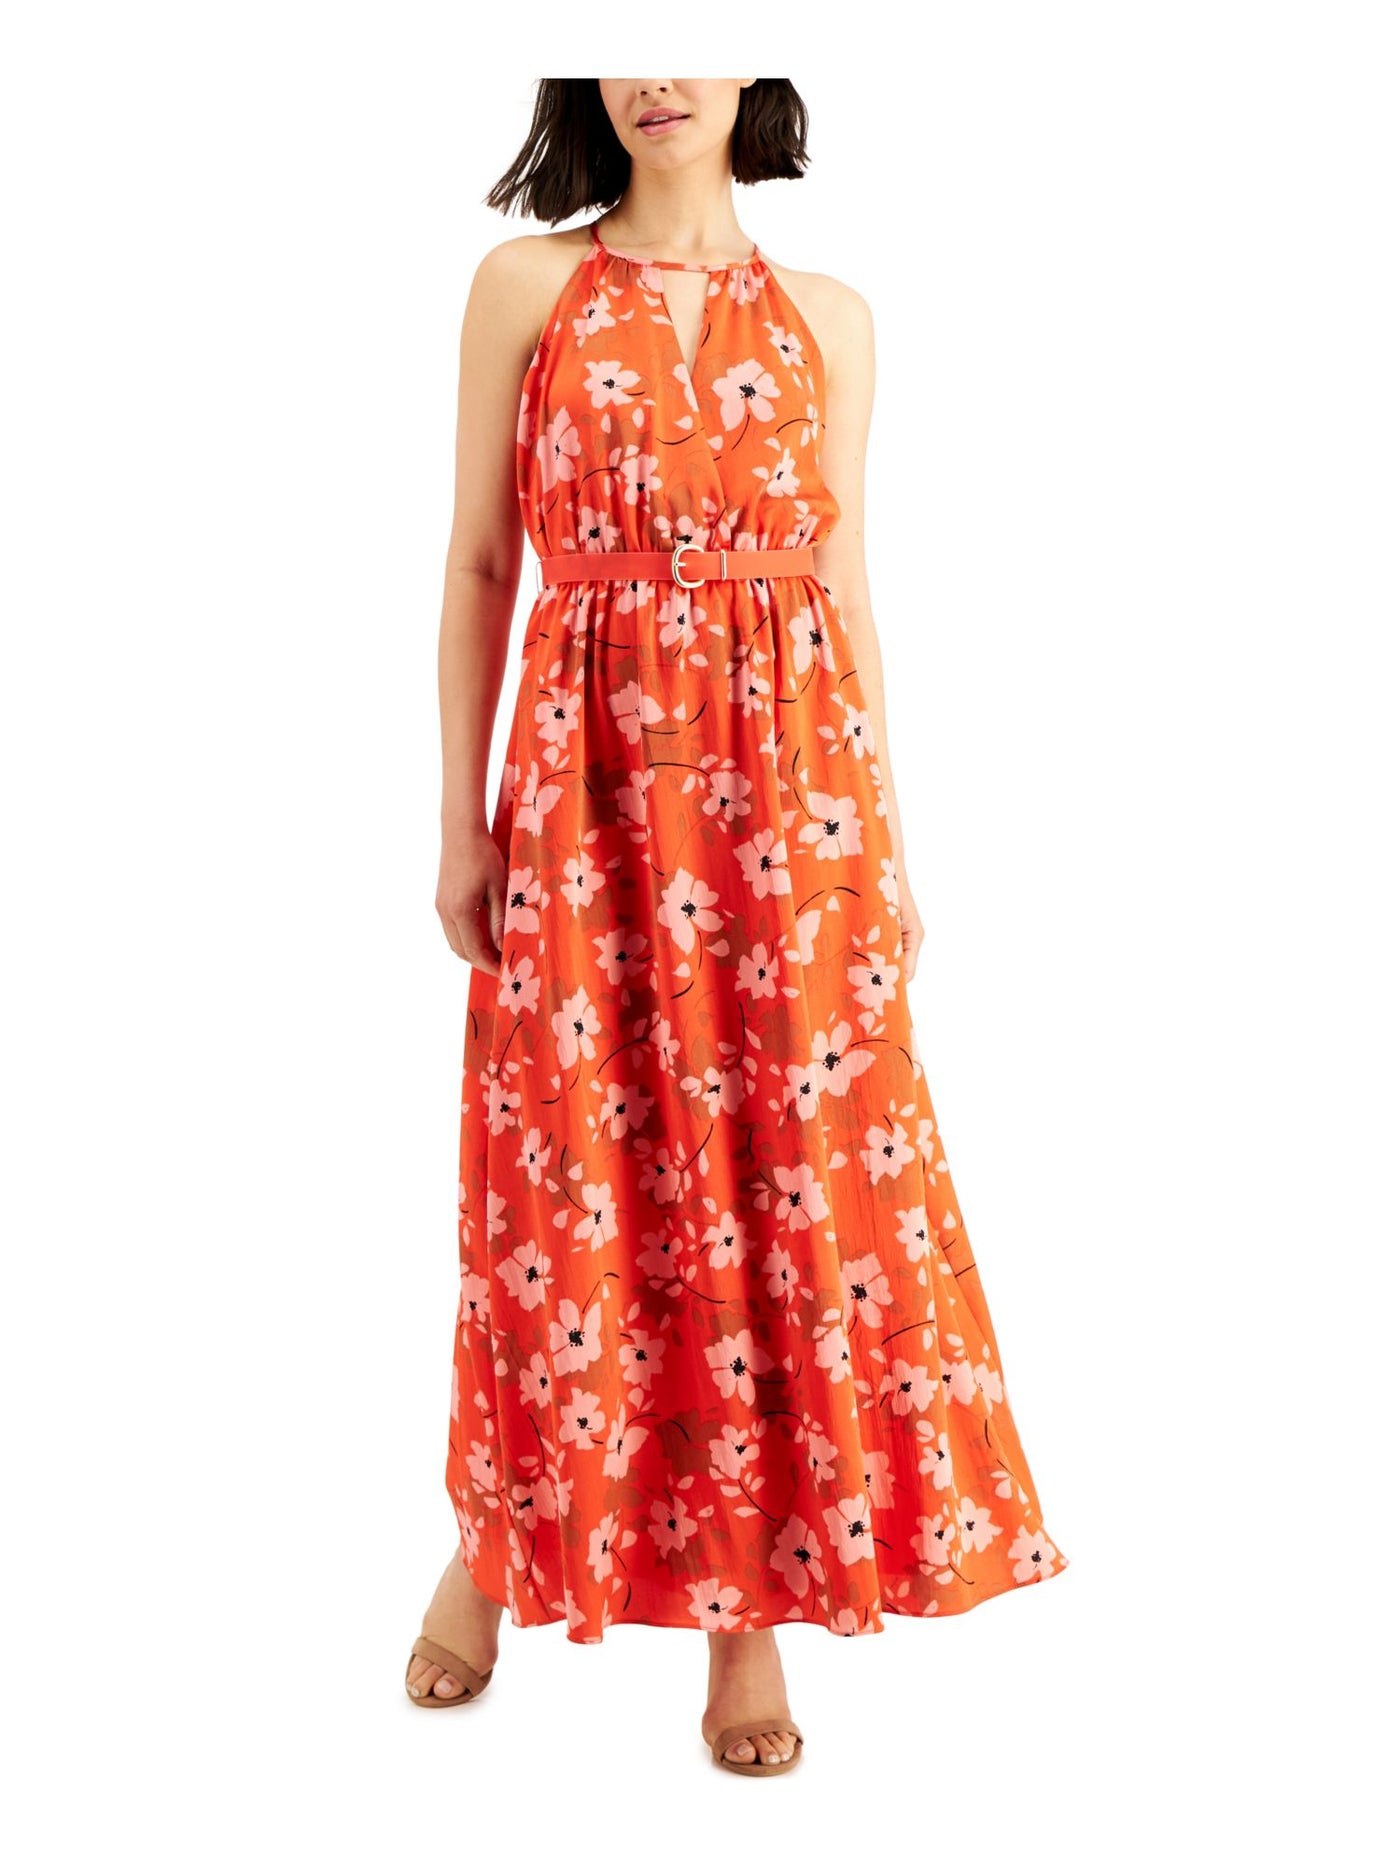 DONNA KARAN NEW YORK Womens Orange Belted Keyholes Elastic Waist Pullover Floral Sleeveless Halter Maxi Fit + Flare Dress 10